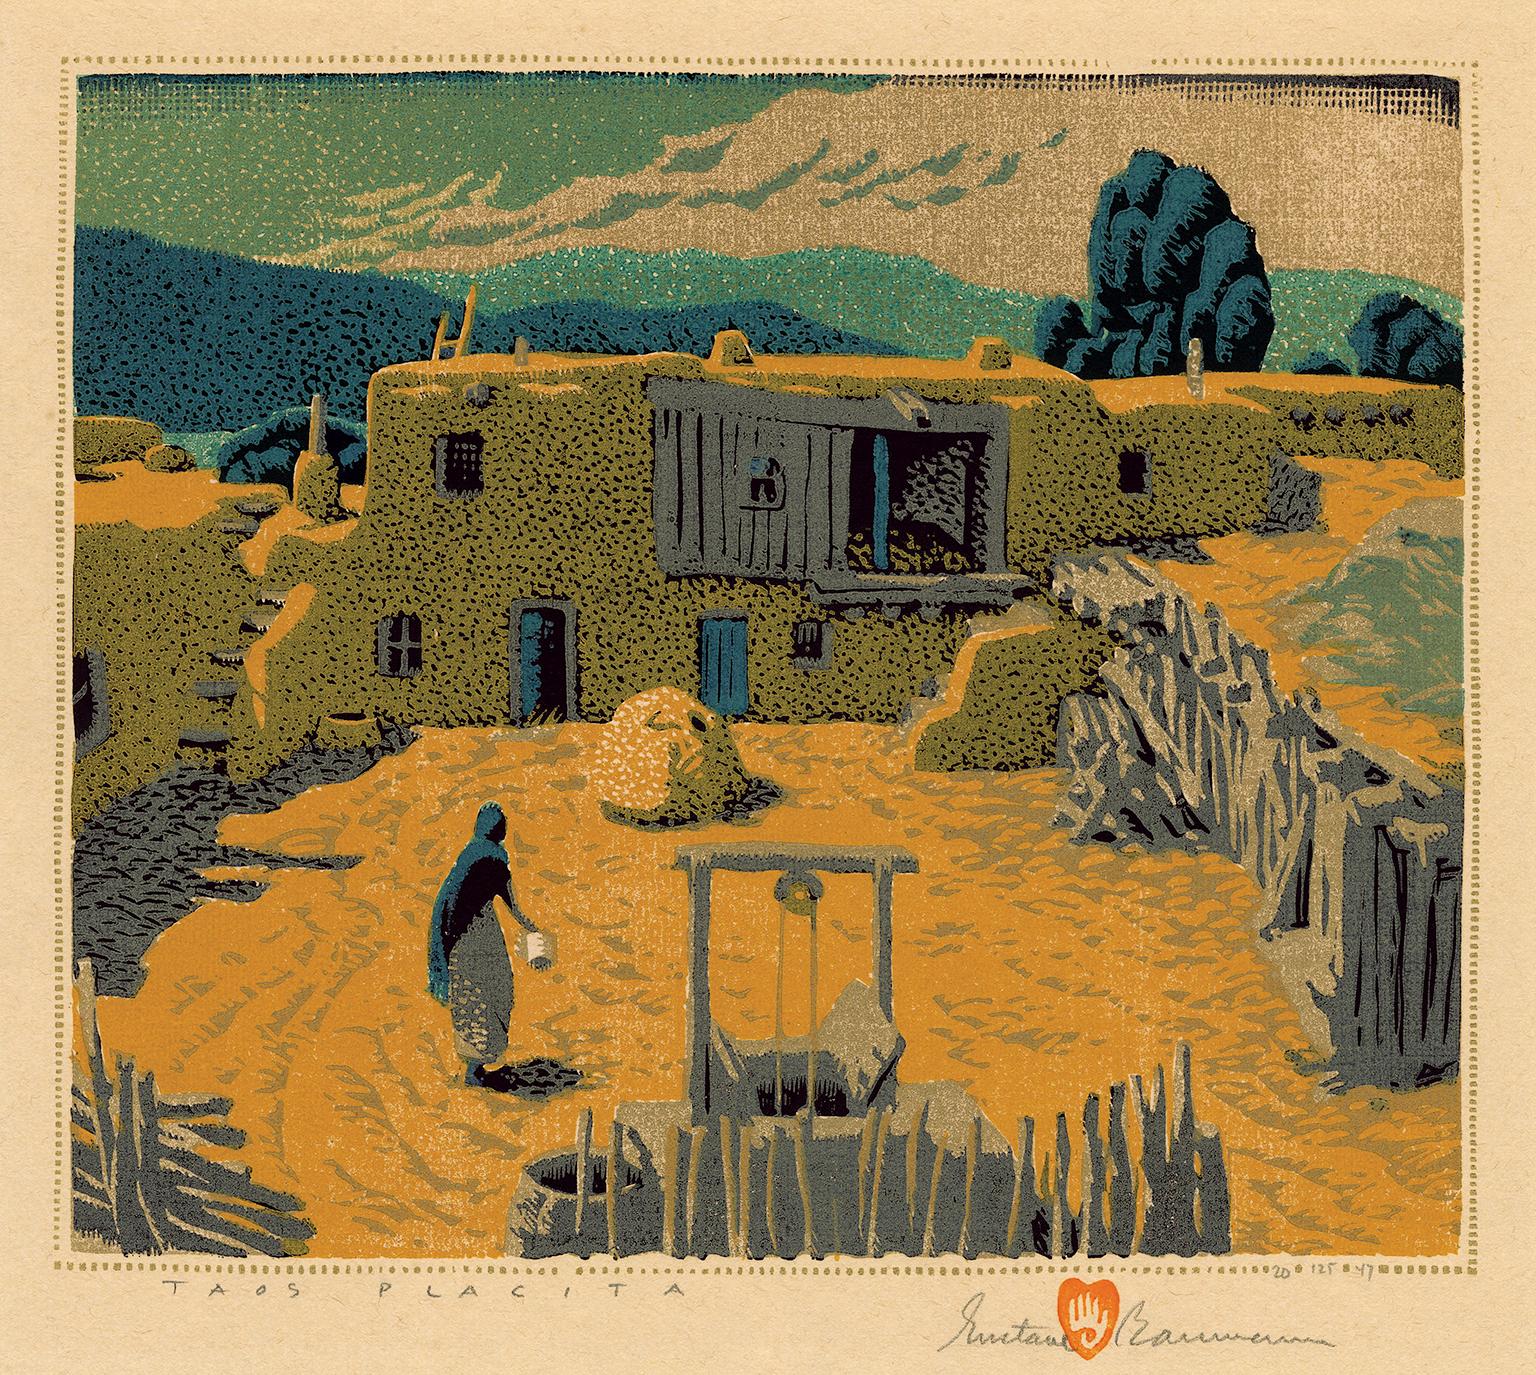 Gustave Baumann Landscape Print - 'Taos Placita' — 1940s Southwest Regionalism